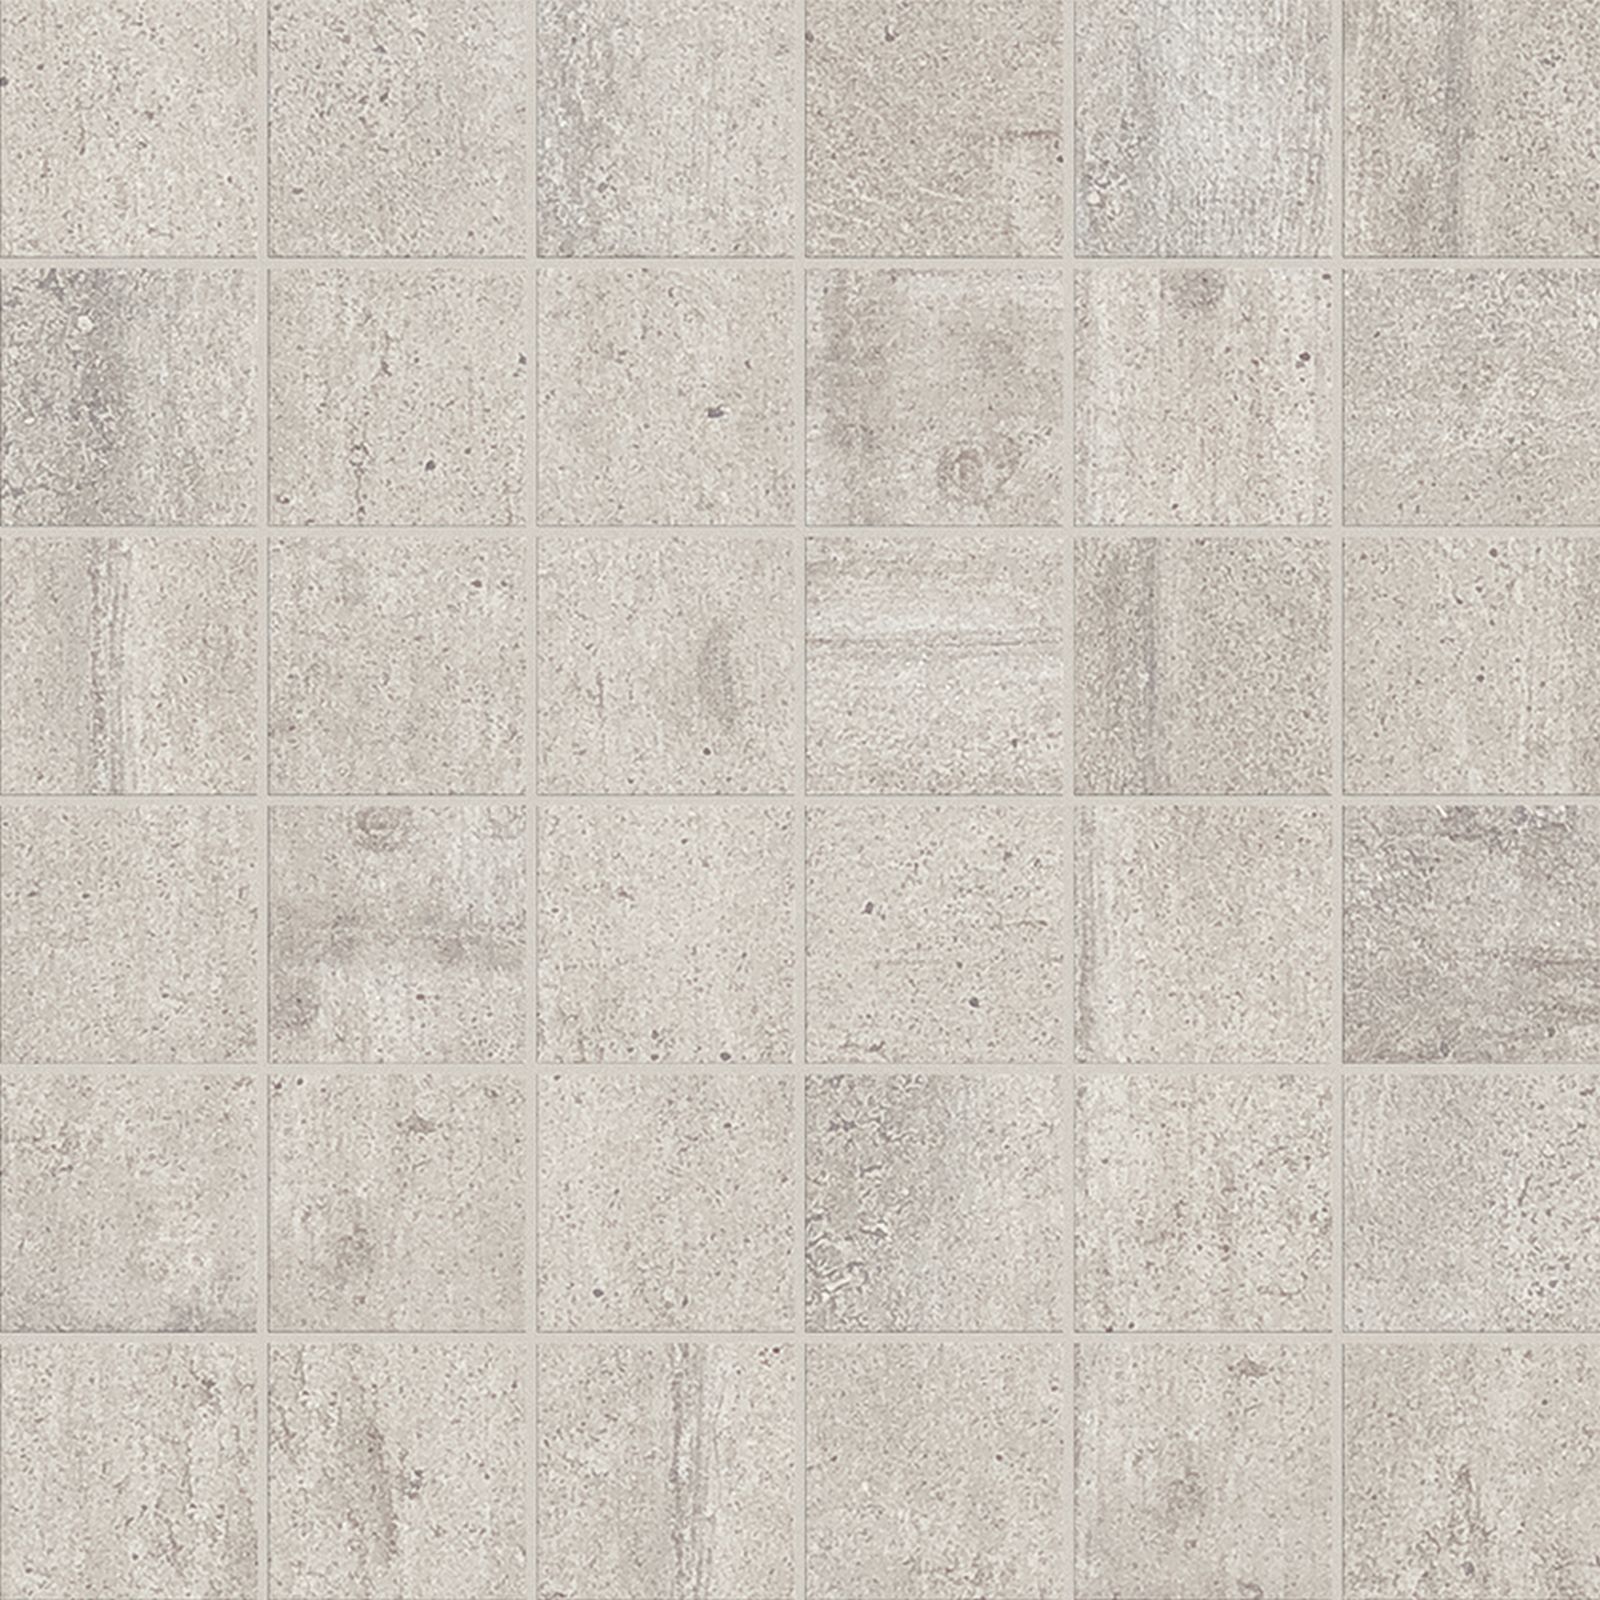 Мозаика Provenza Re-Use Mosaico 5X5 Fango Sand Naturale E1R1, цвет серый бежевый, поверхность натуральная, квадрат, 300x300